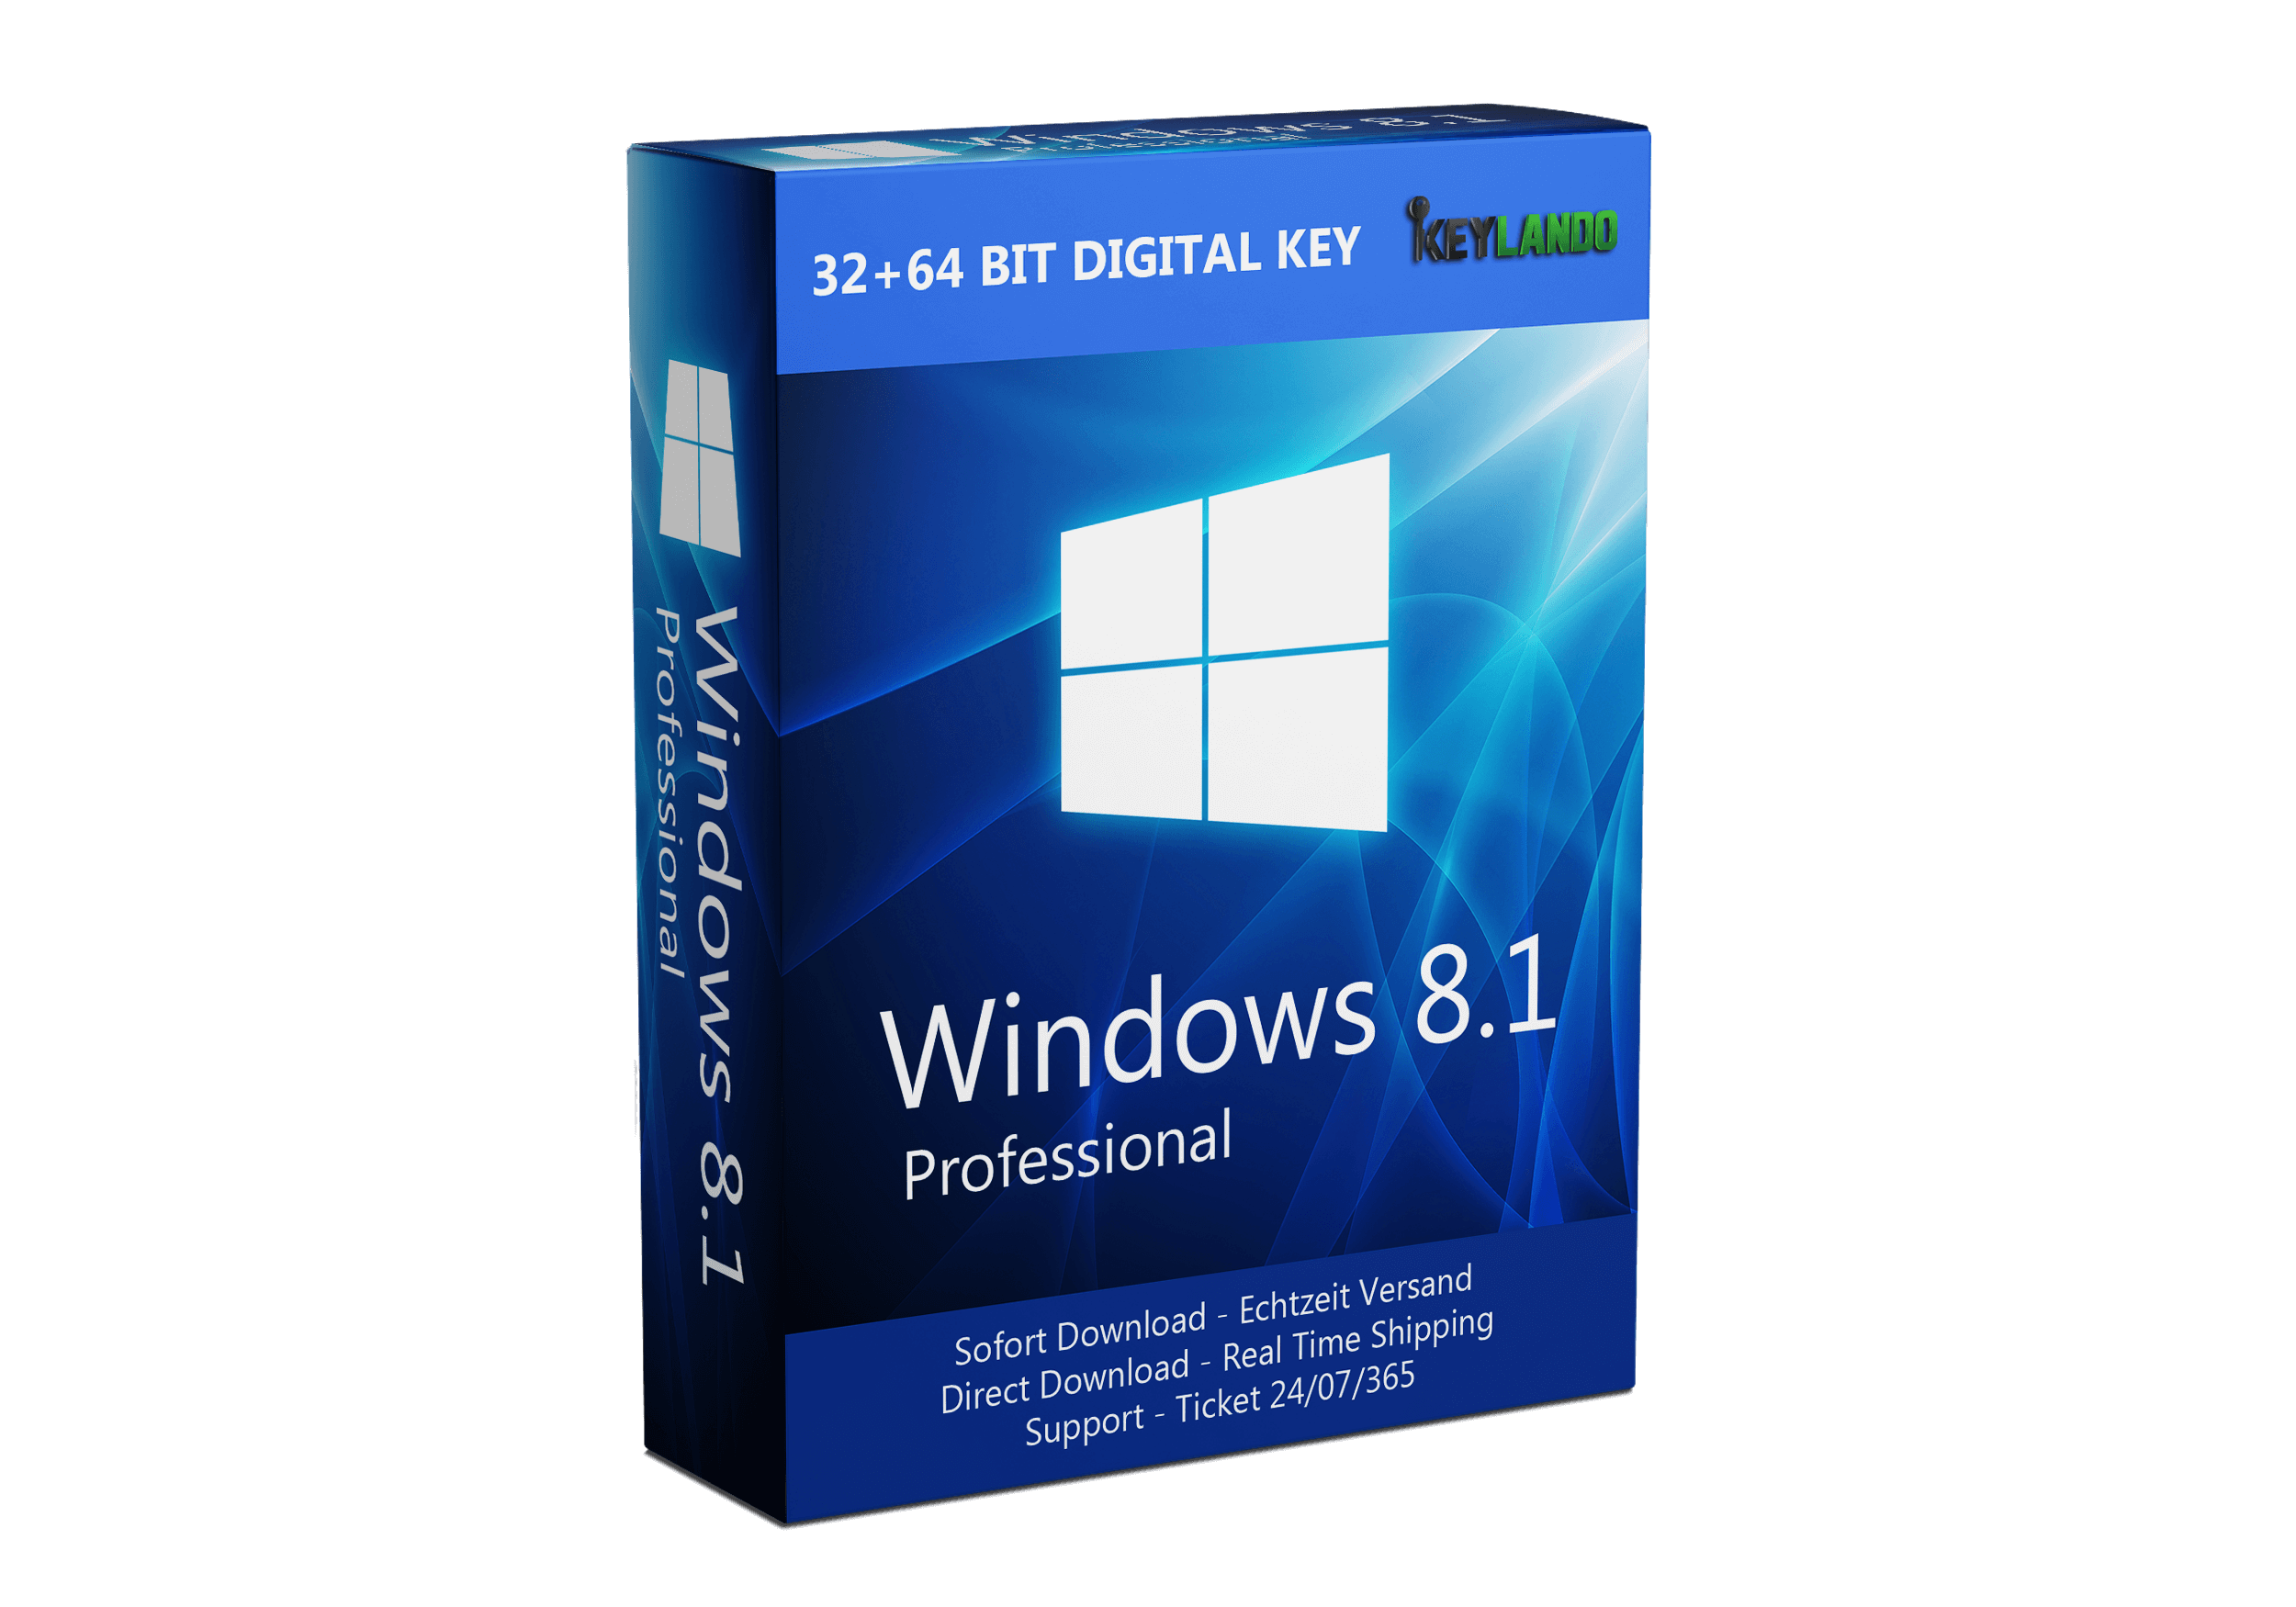 Windows 8.1 professional